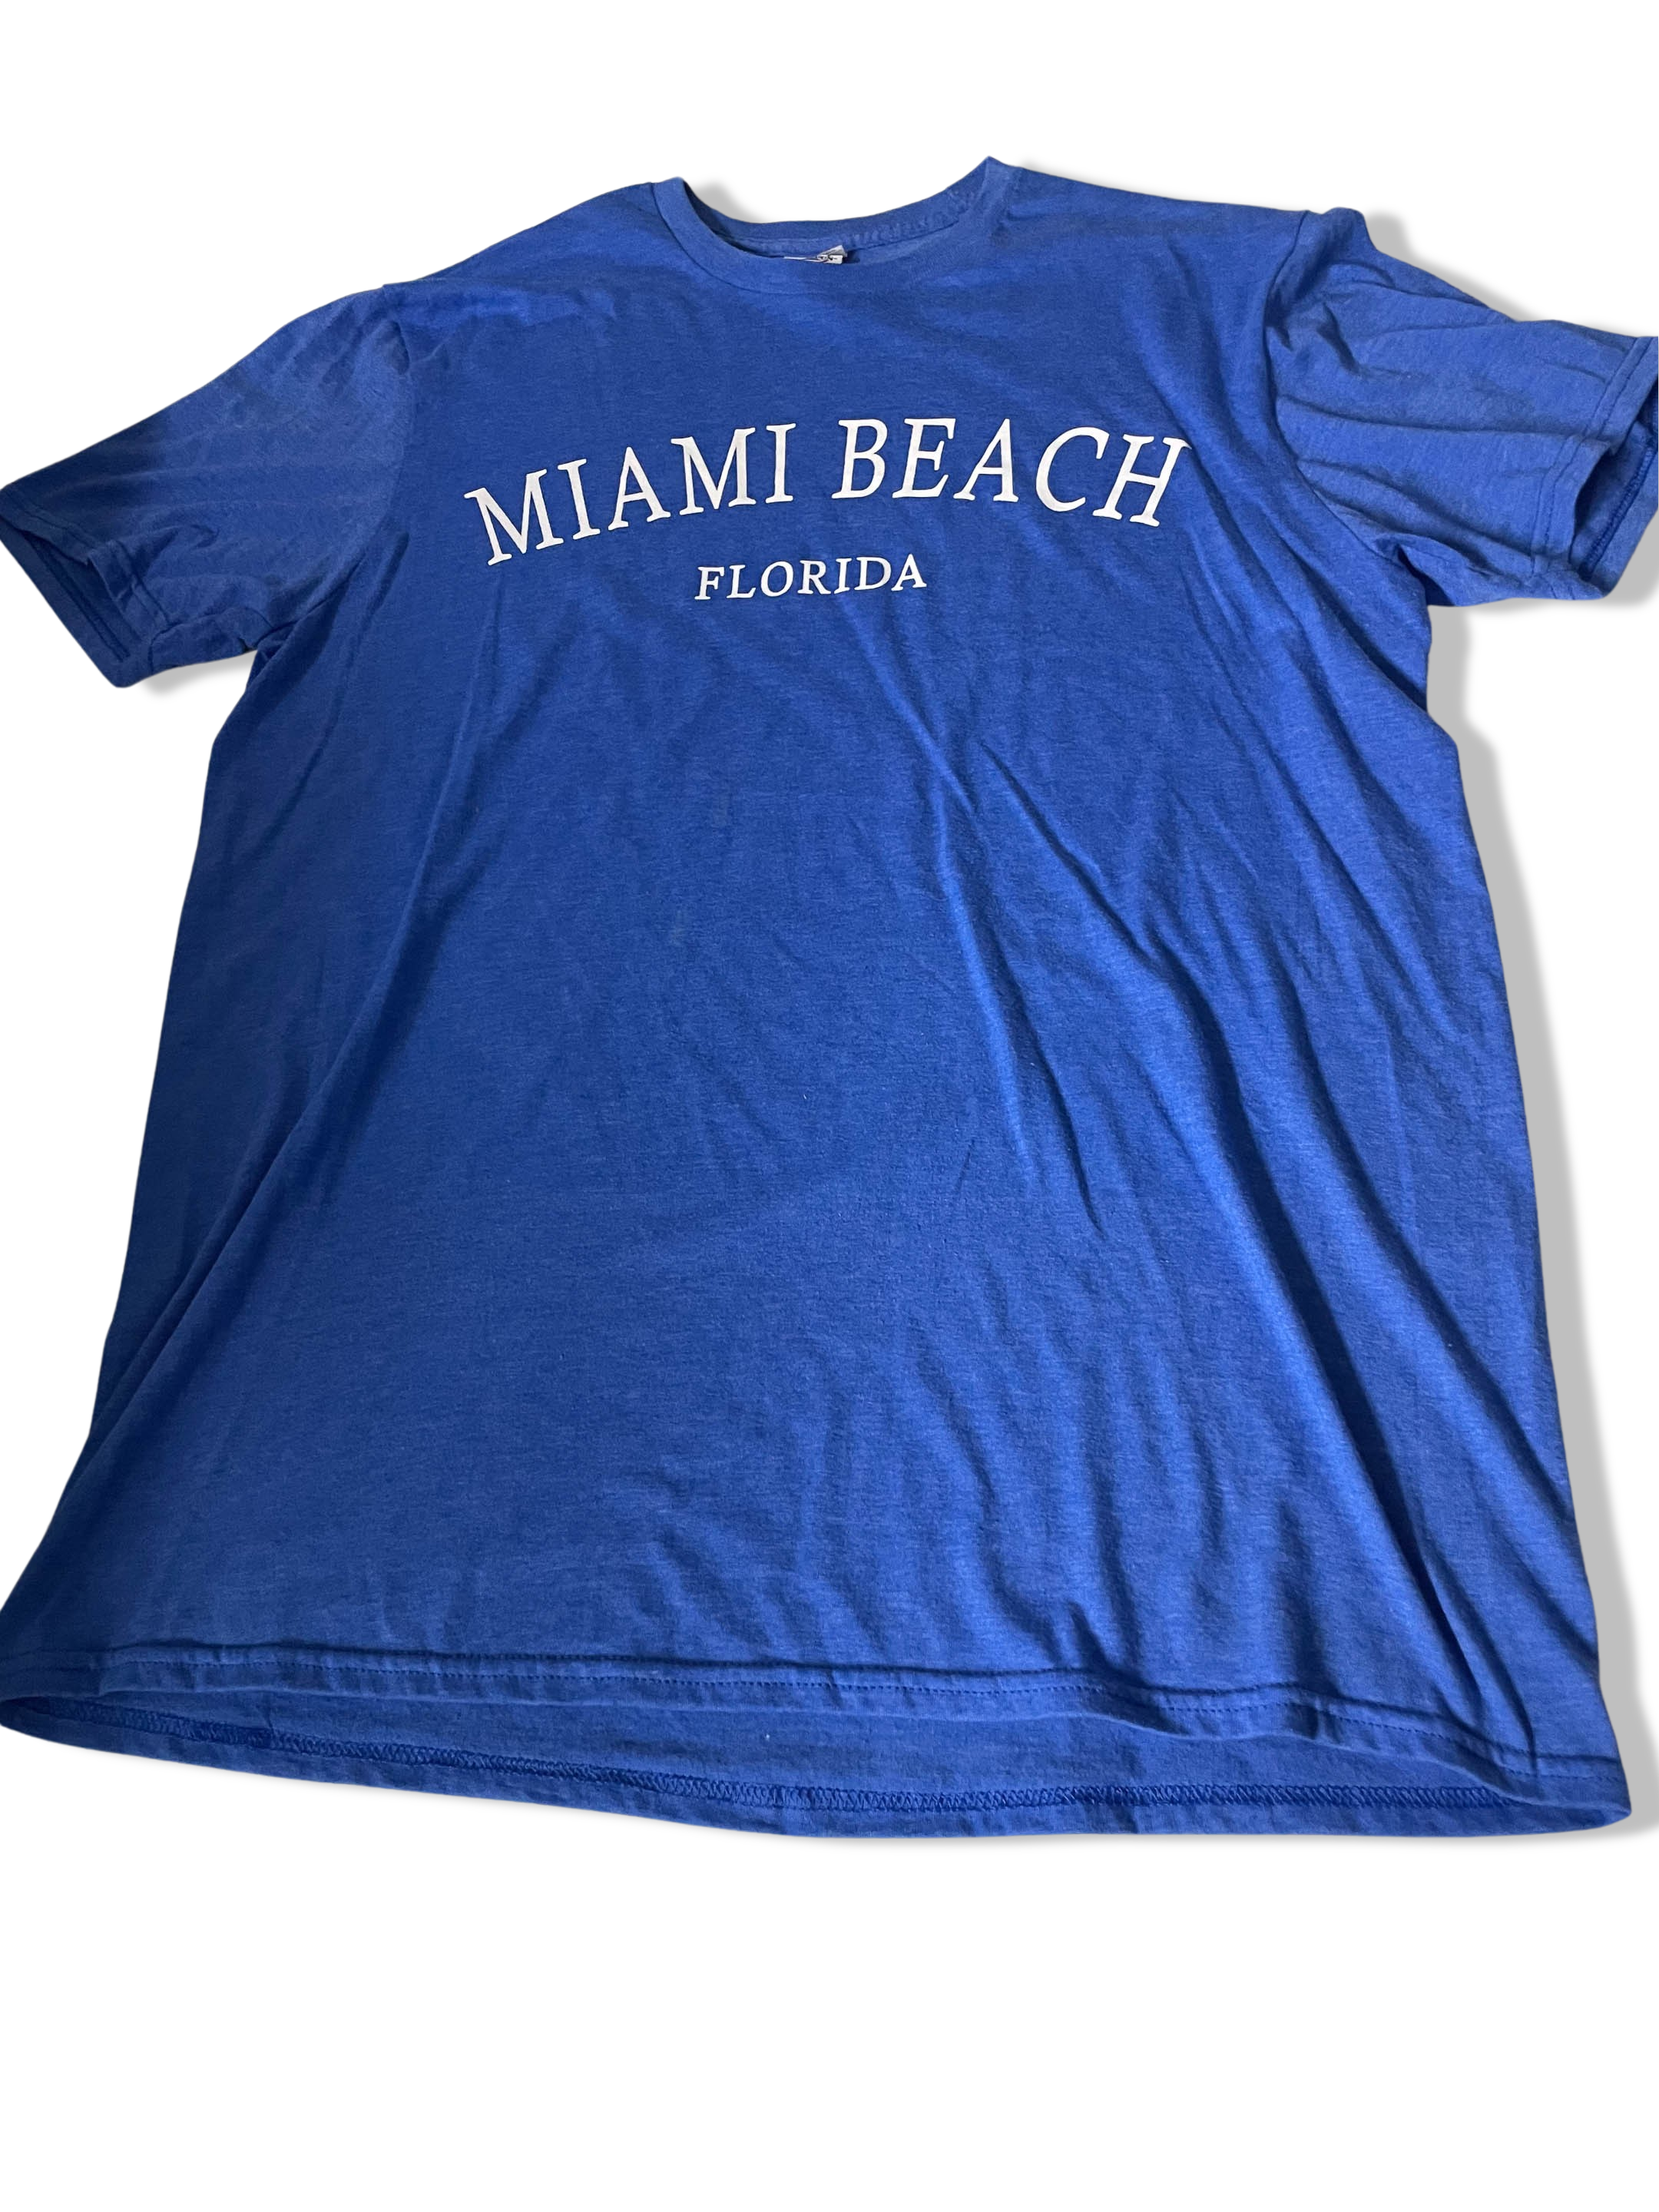 Vintage Delta Miami Beach Florida print blue large short sleeve tees